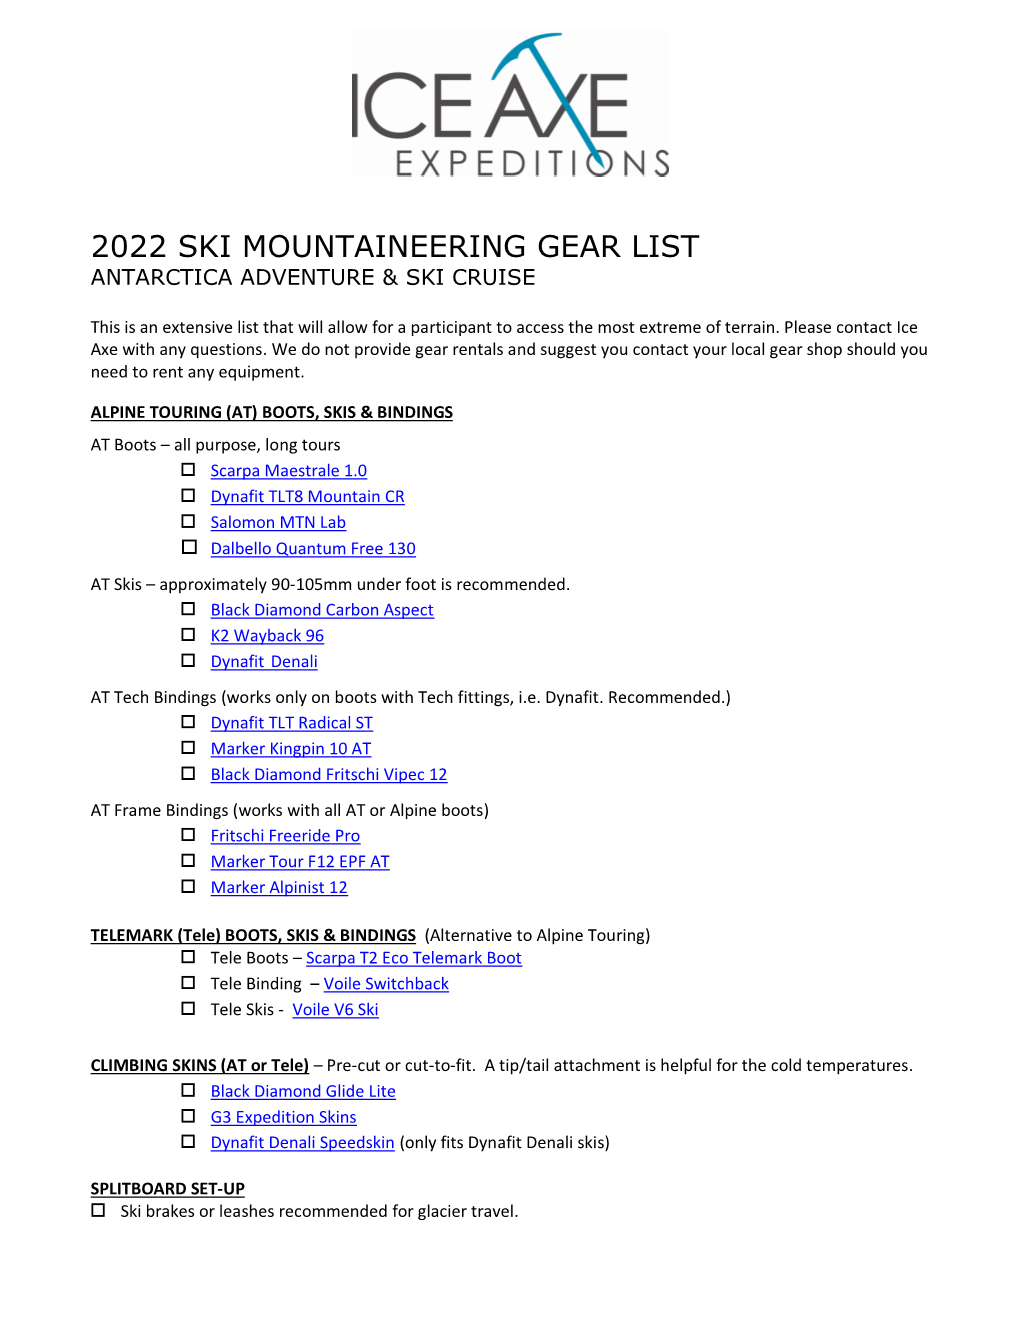 2022 Ski Mountaineering Gear List Antarctica Adventure & Ski Cruise